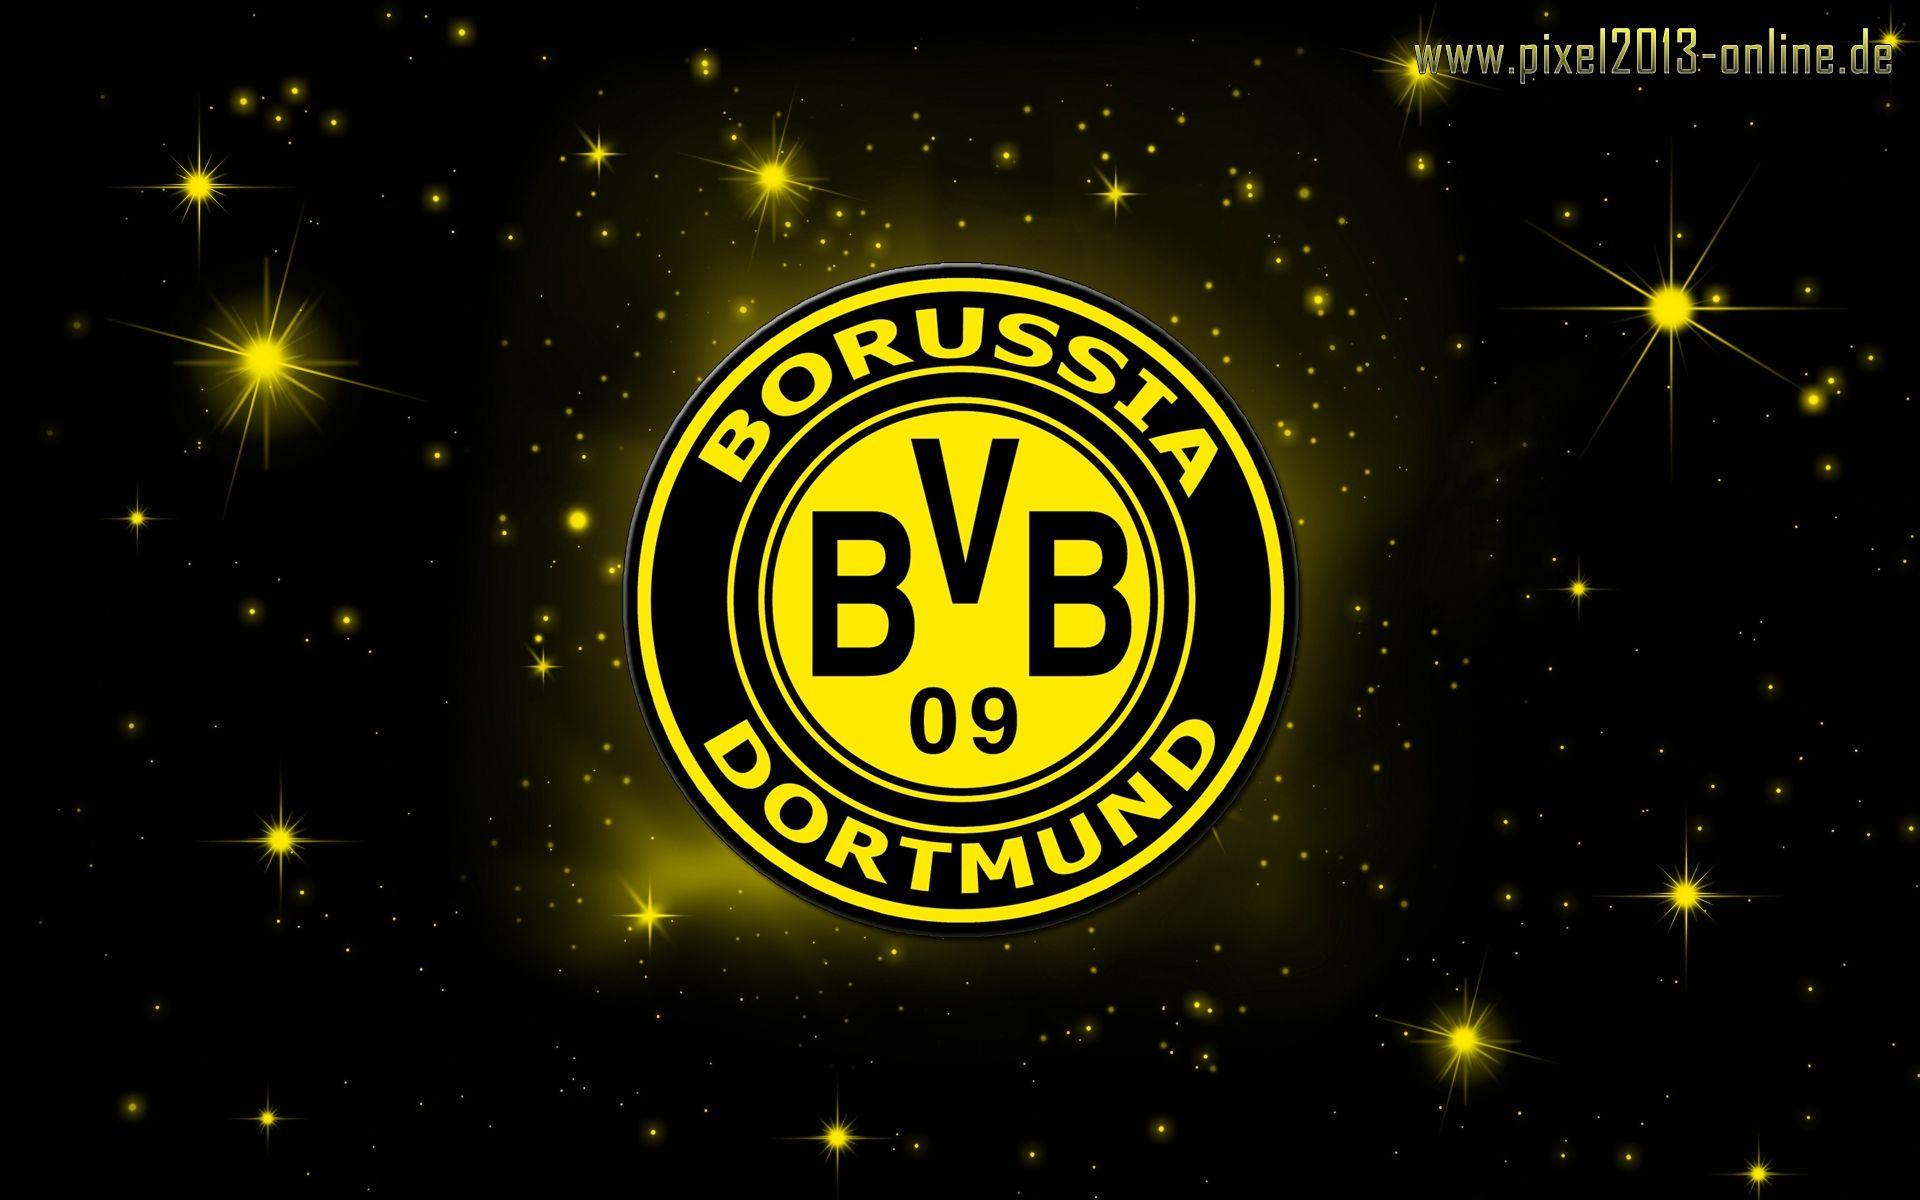 Dortmund Logo - Borussia Dortmund Football Club Logo Picture